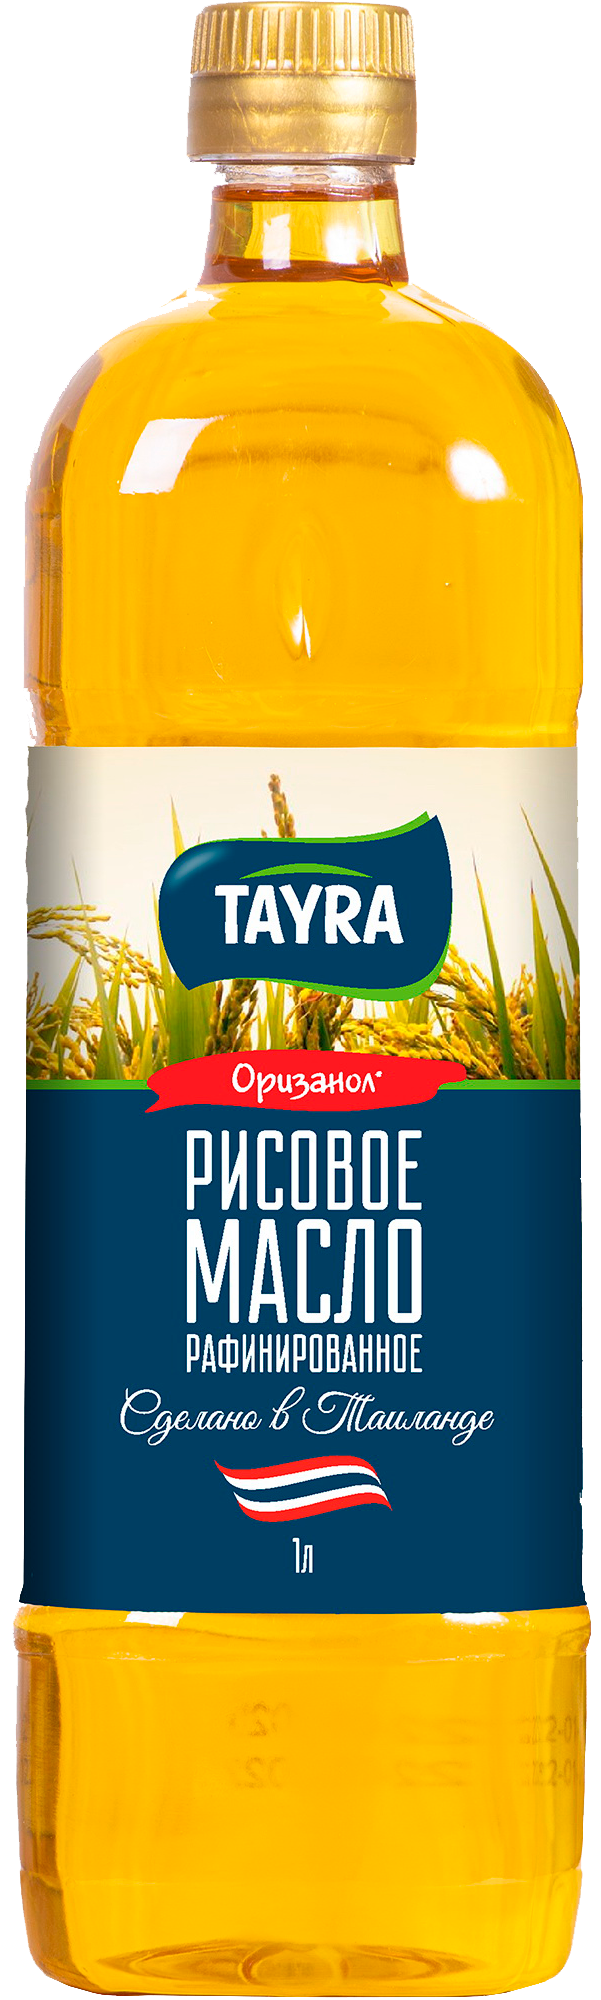 Рисовое масло, 1 л, TAYRA - фото 1